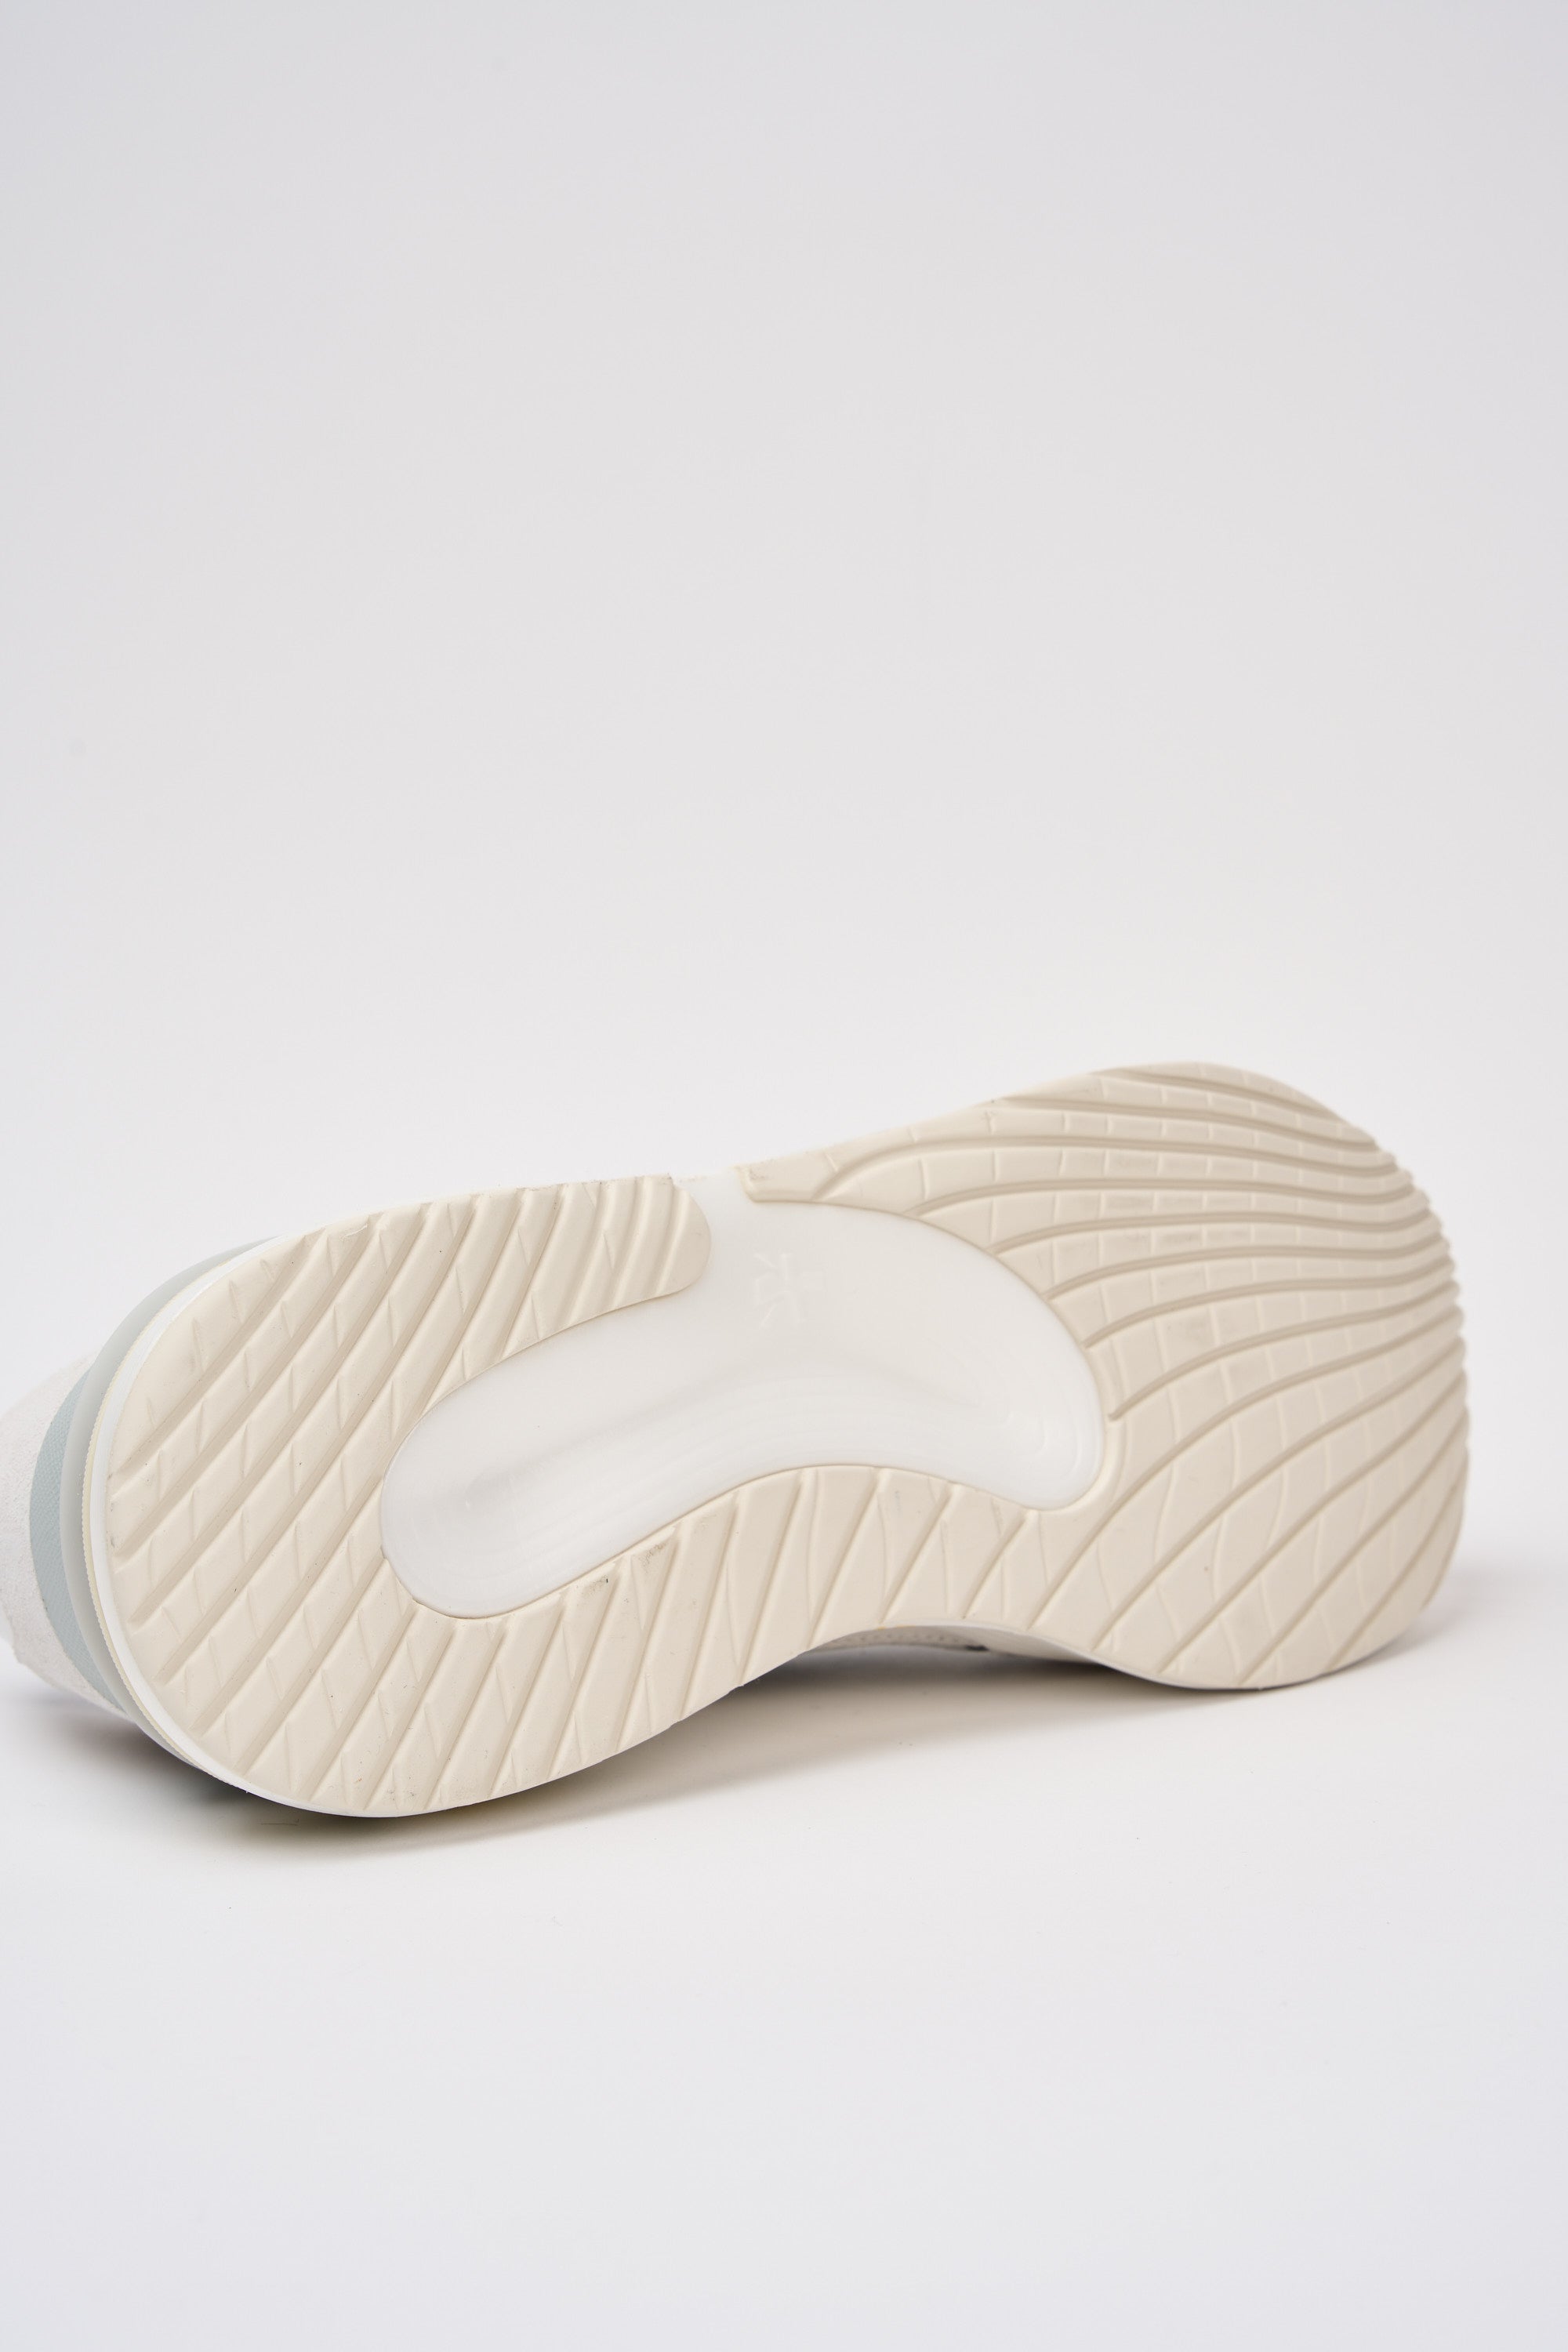 Premiata Sneaker Moerun Suede/Leather/Nylon White-5